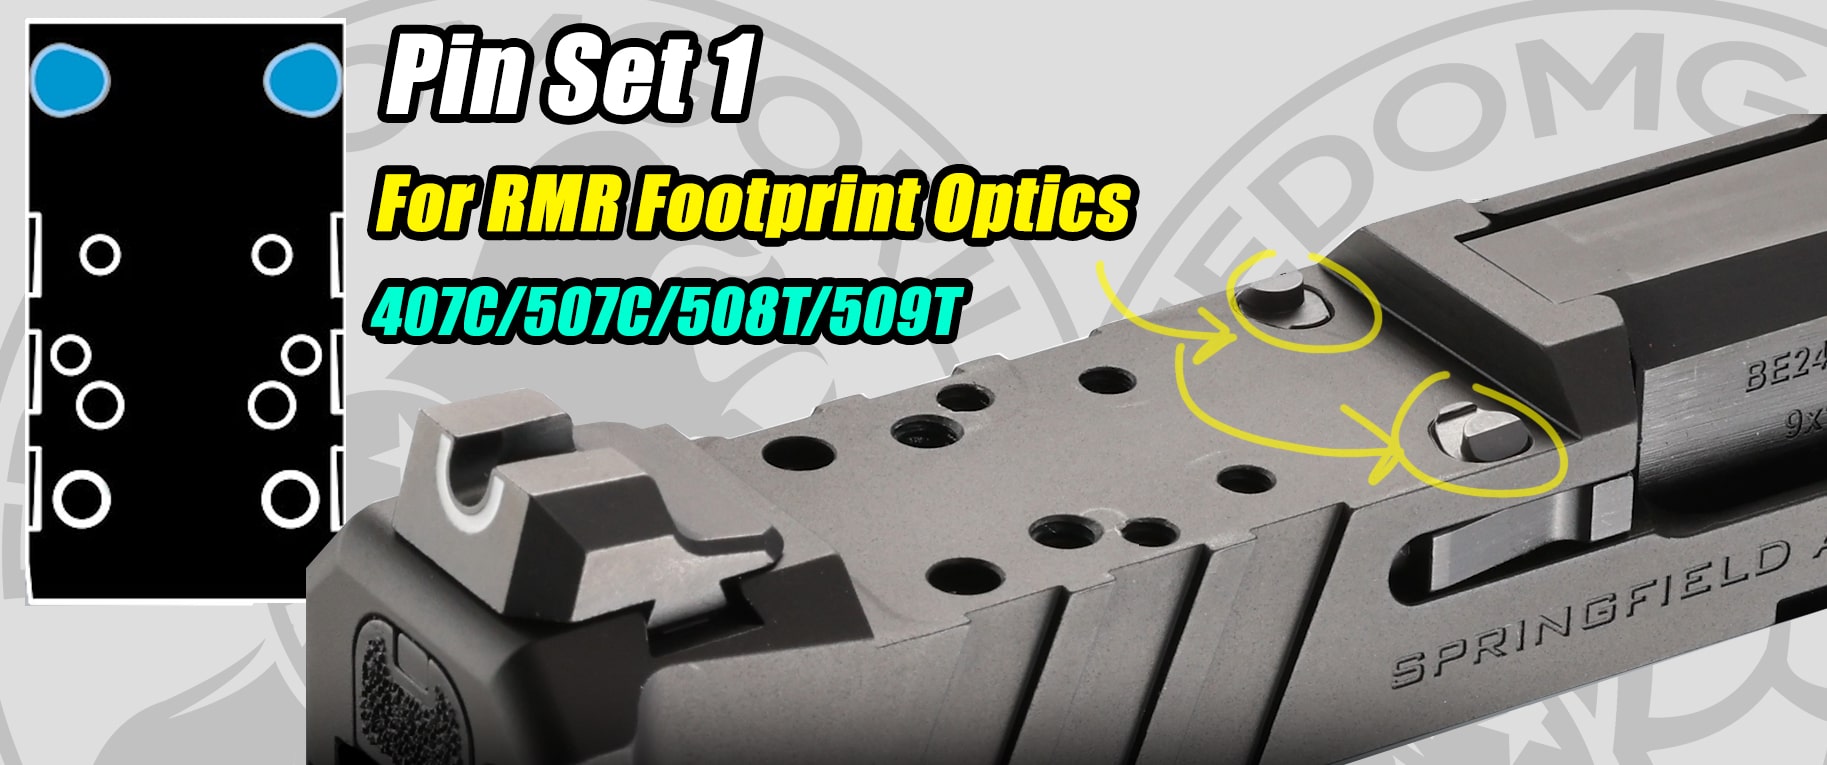 Springfield Armory Echelon Pin Set 1 RMR Footprint - for Holosun 407C, 507C, 508T, 509T